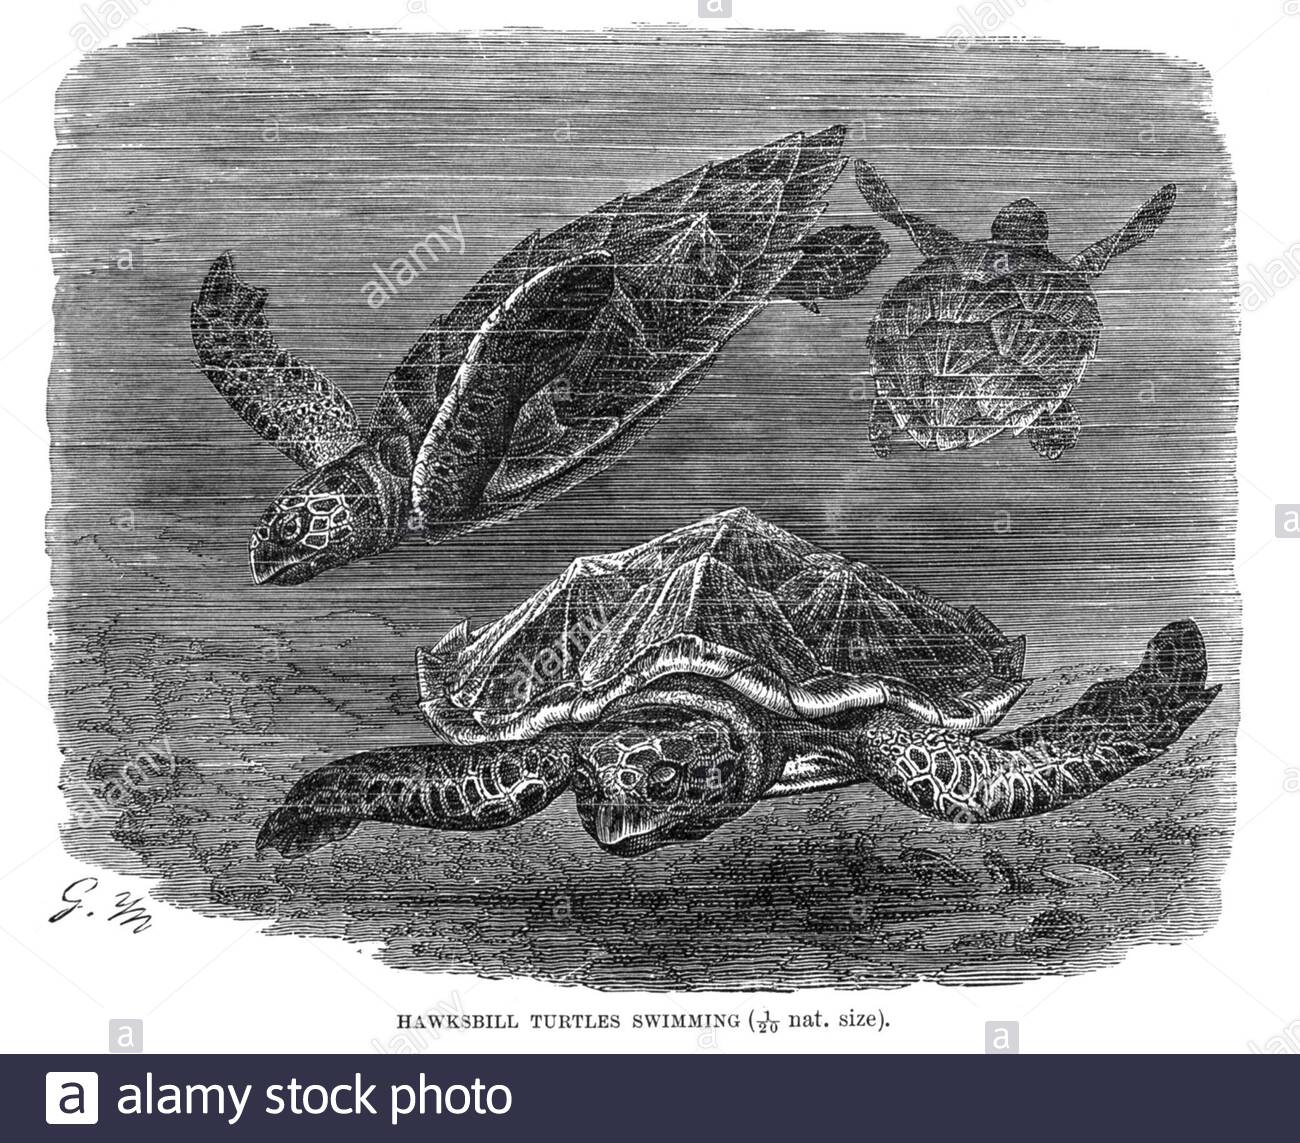 Hawksbill Turtle, vintage illustration from 1896 Stock Photo